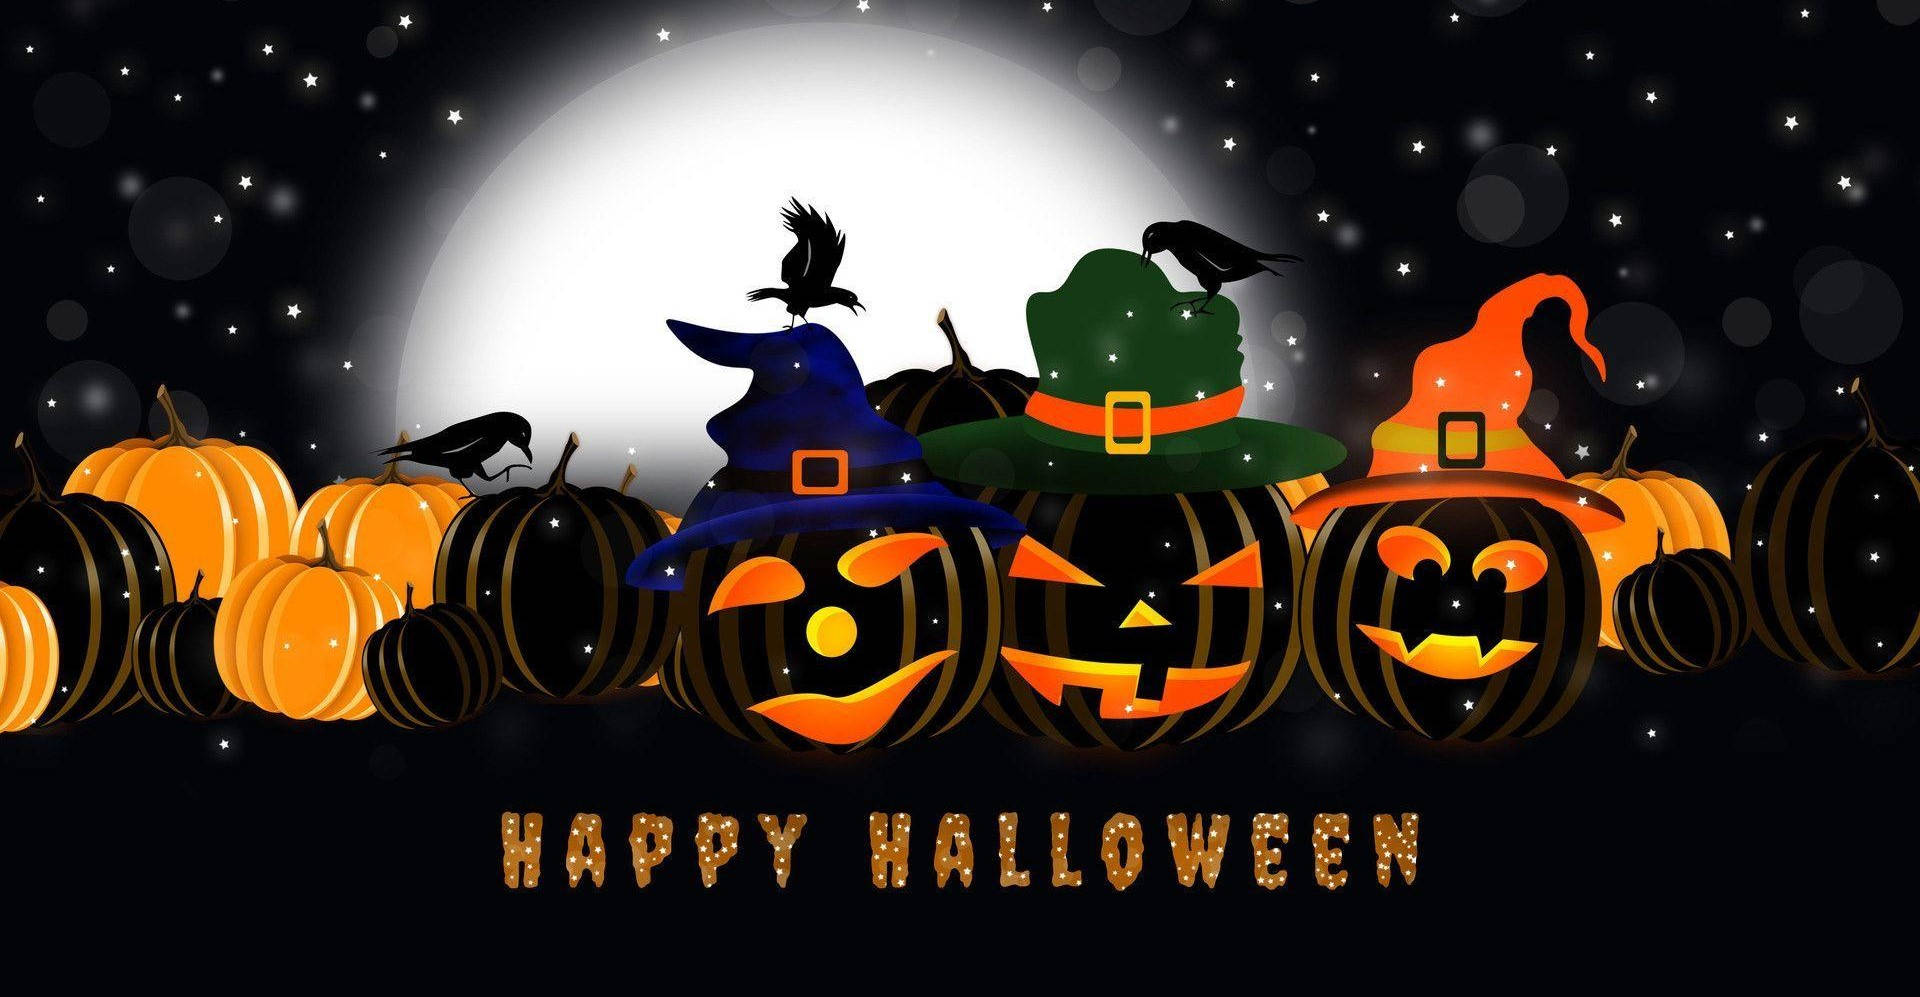 Halloween Wallpaper Images  Free Download on Freepik